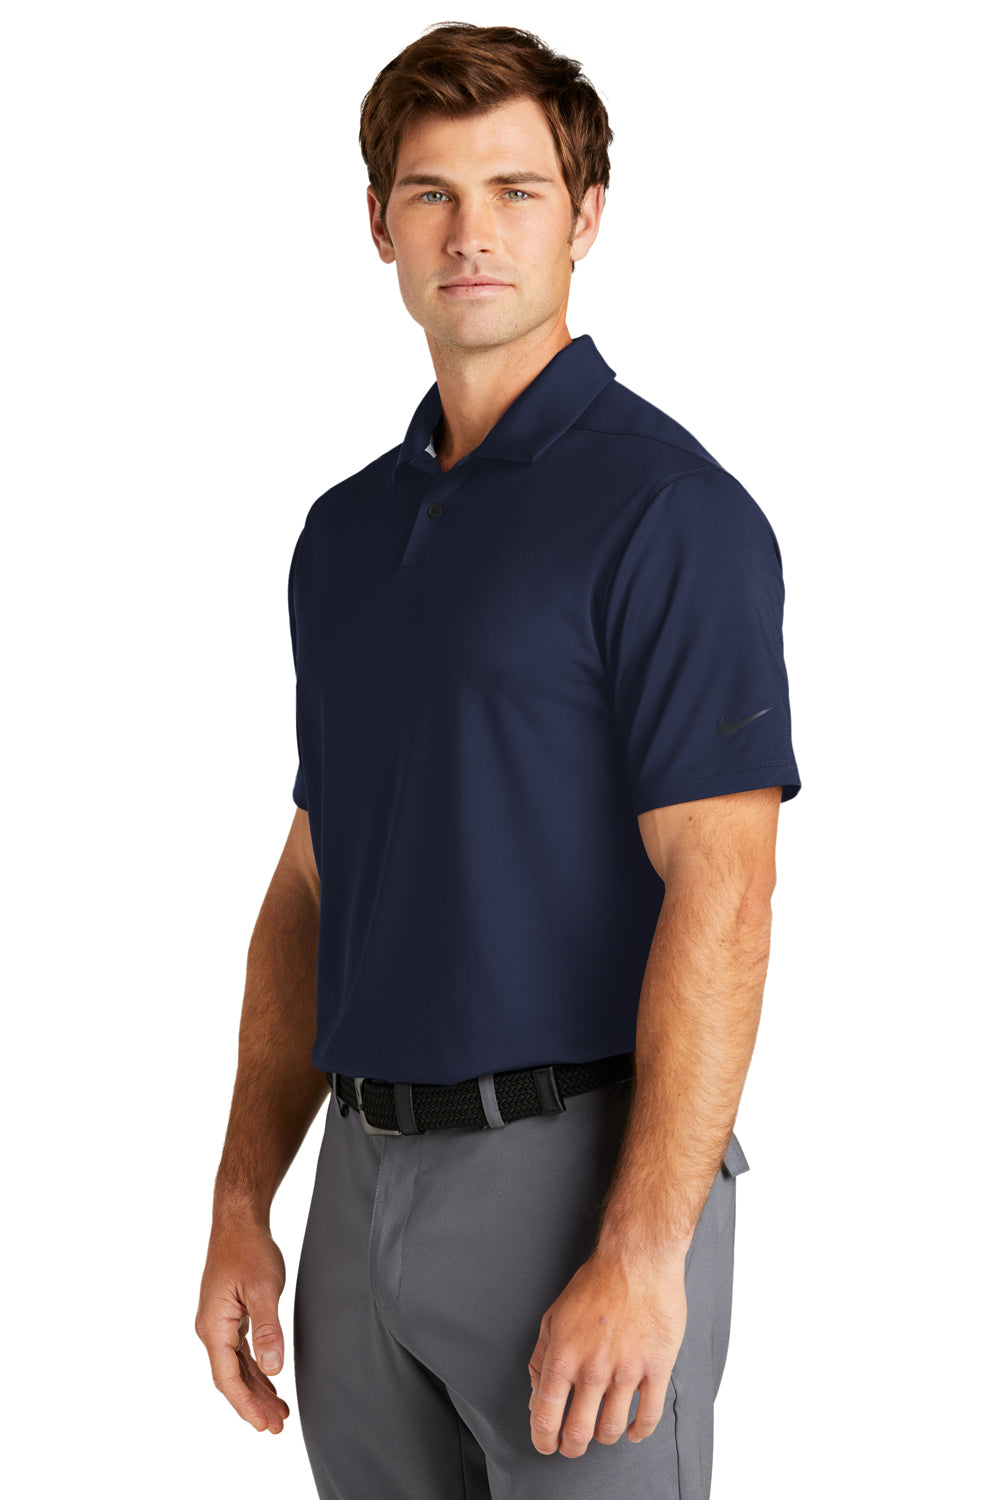 Nike NKDC2108 Mens Vapor Dri-Fit Moisture Wicking Short Sleeve Polo Shirt Midnight Navy Blue Model 3Q